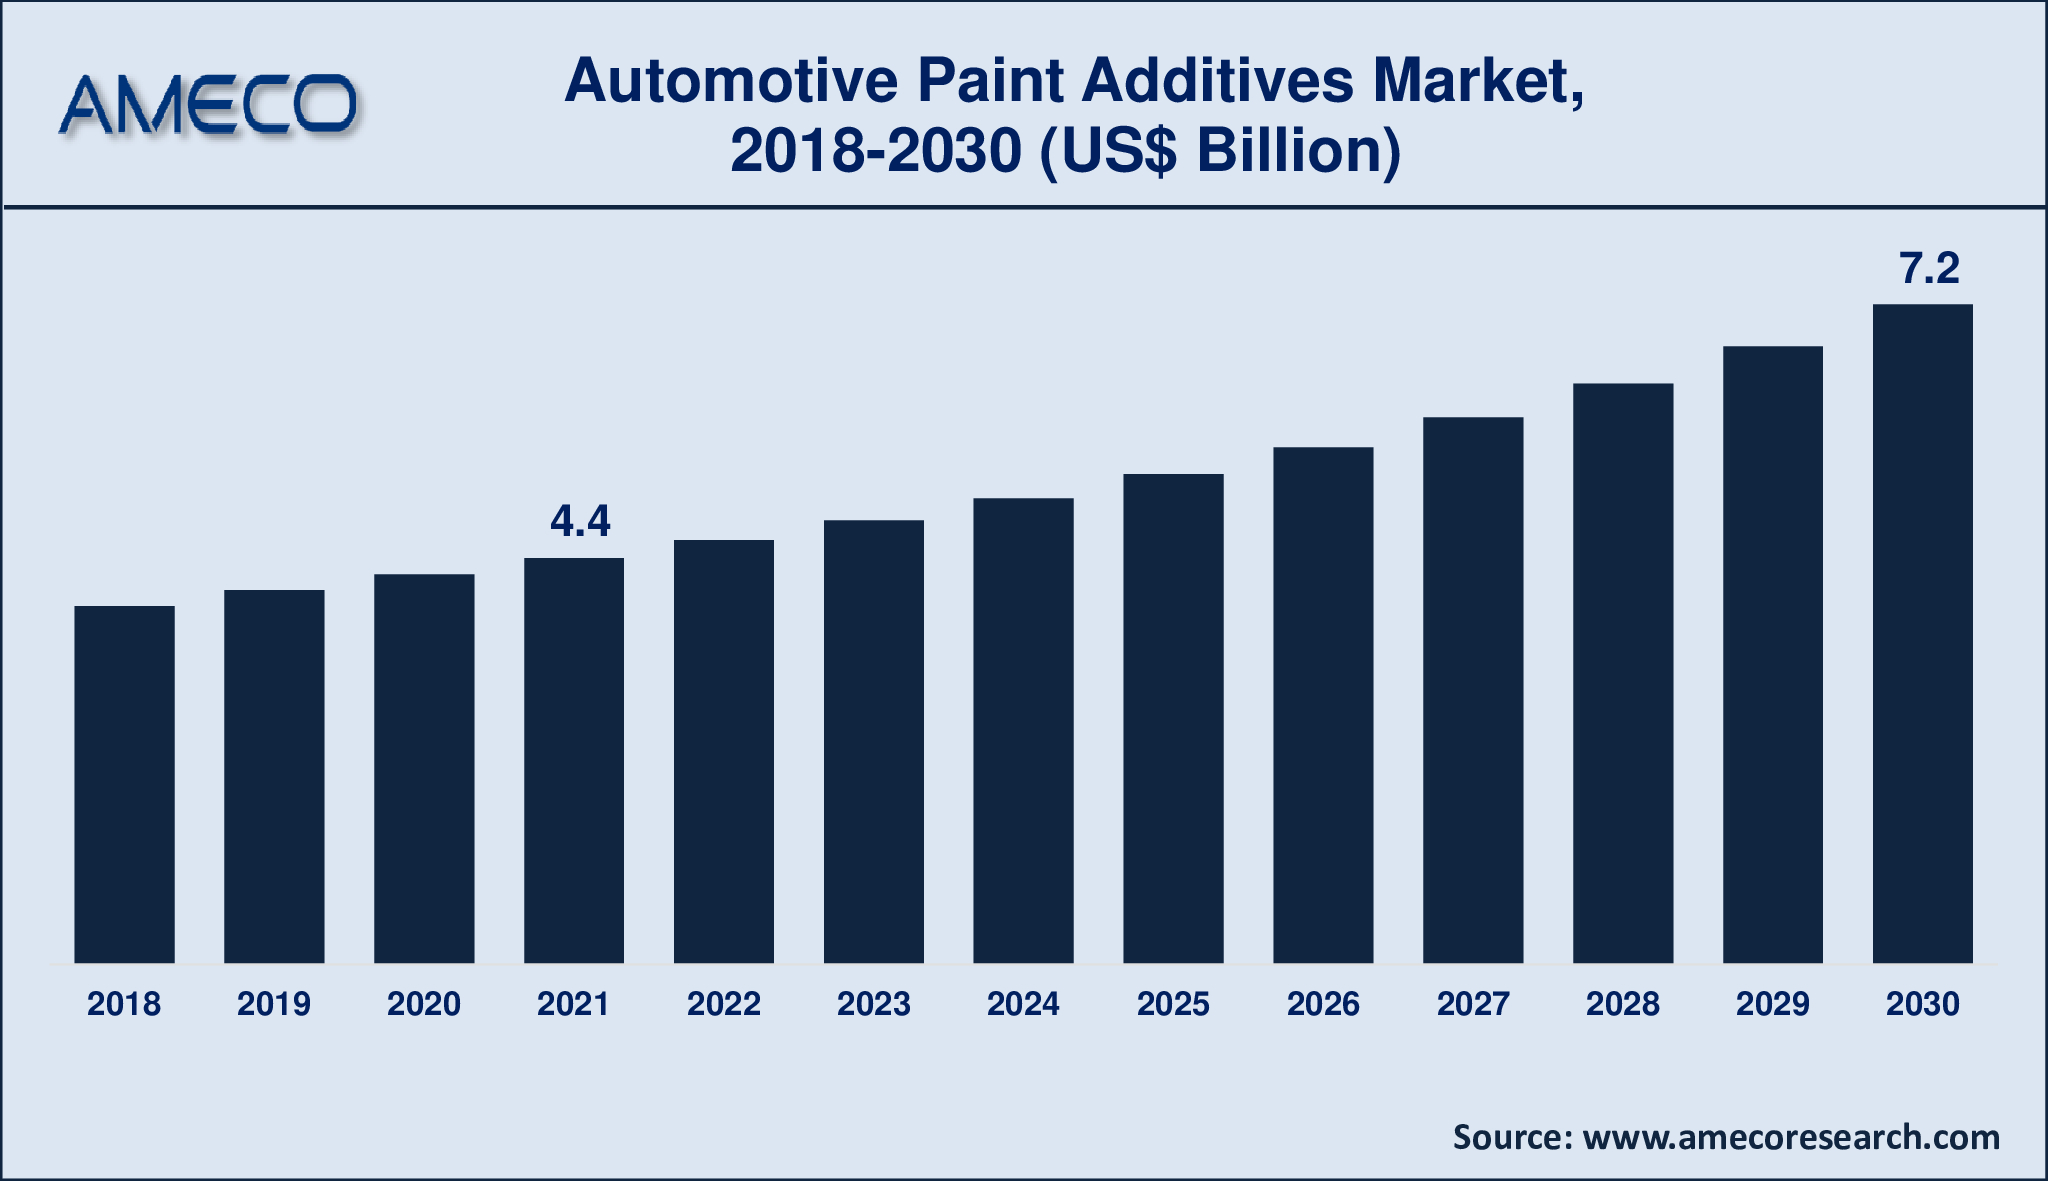 Automotive Paint Additives Market Analysis Period